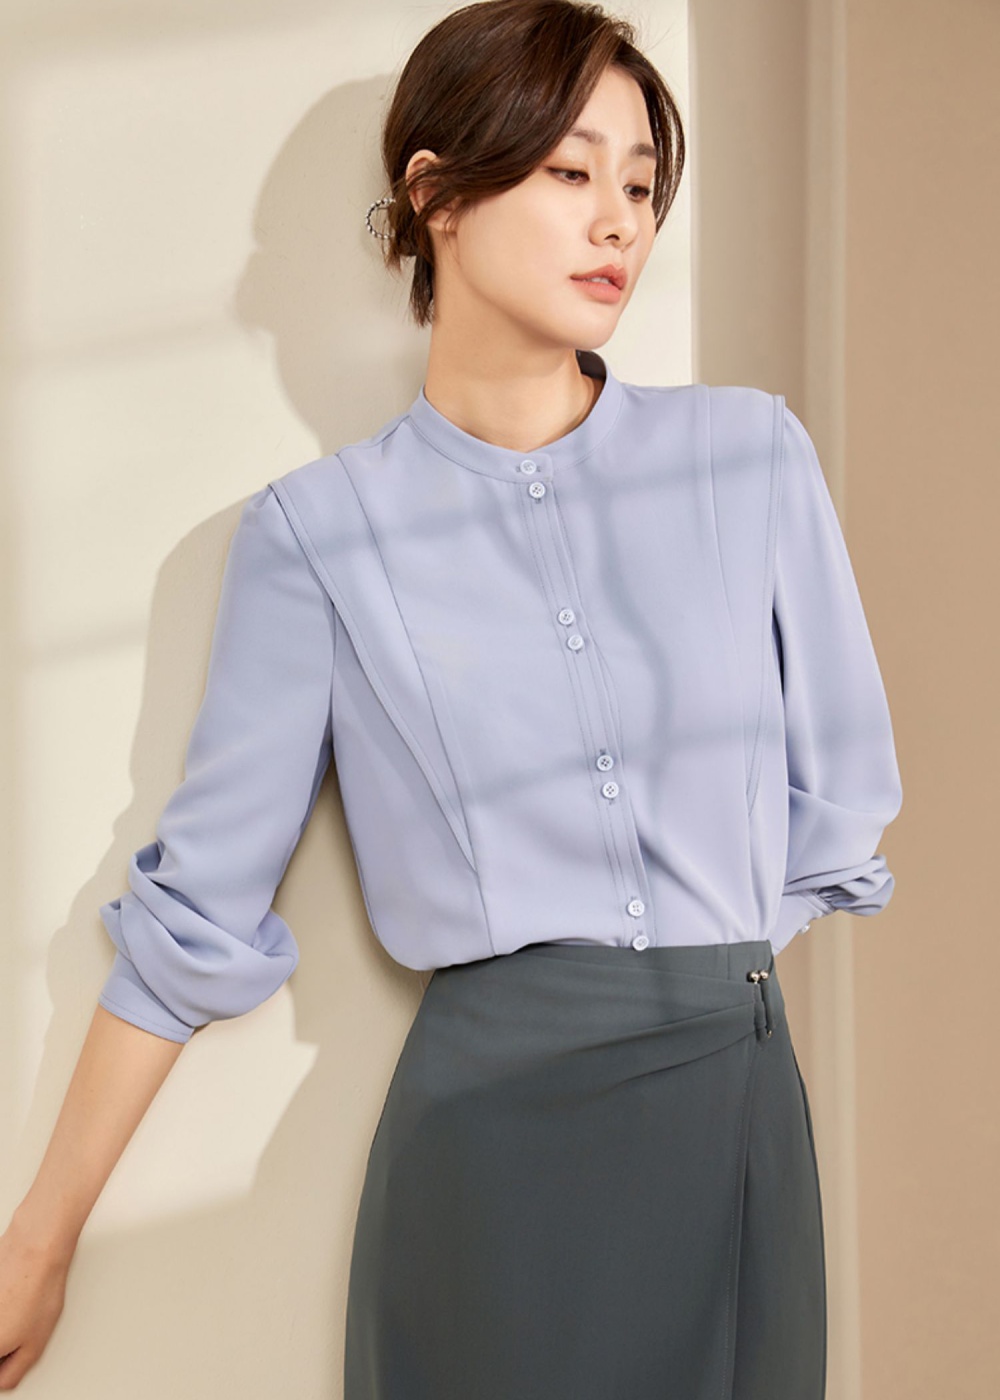 Profession long sleeve shirt temperament tops for women